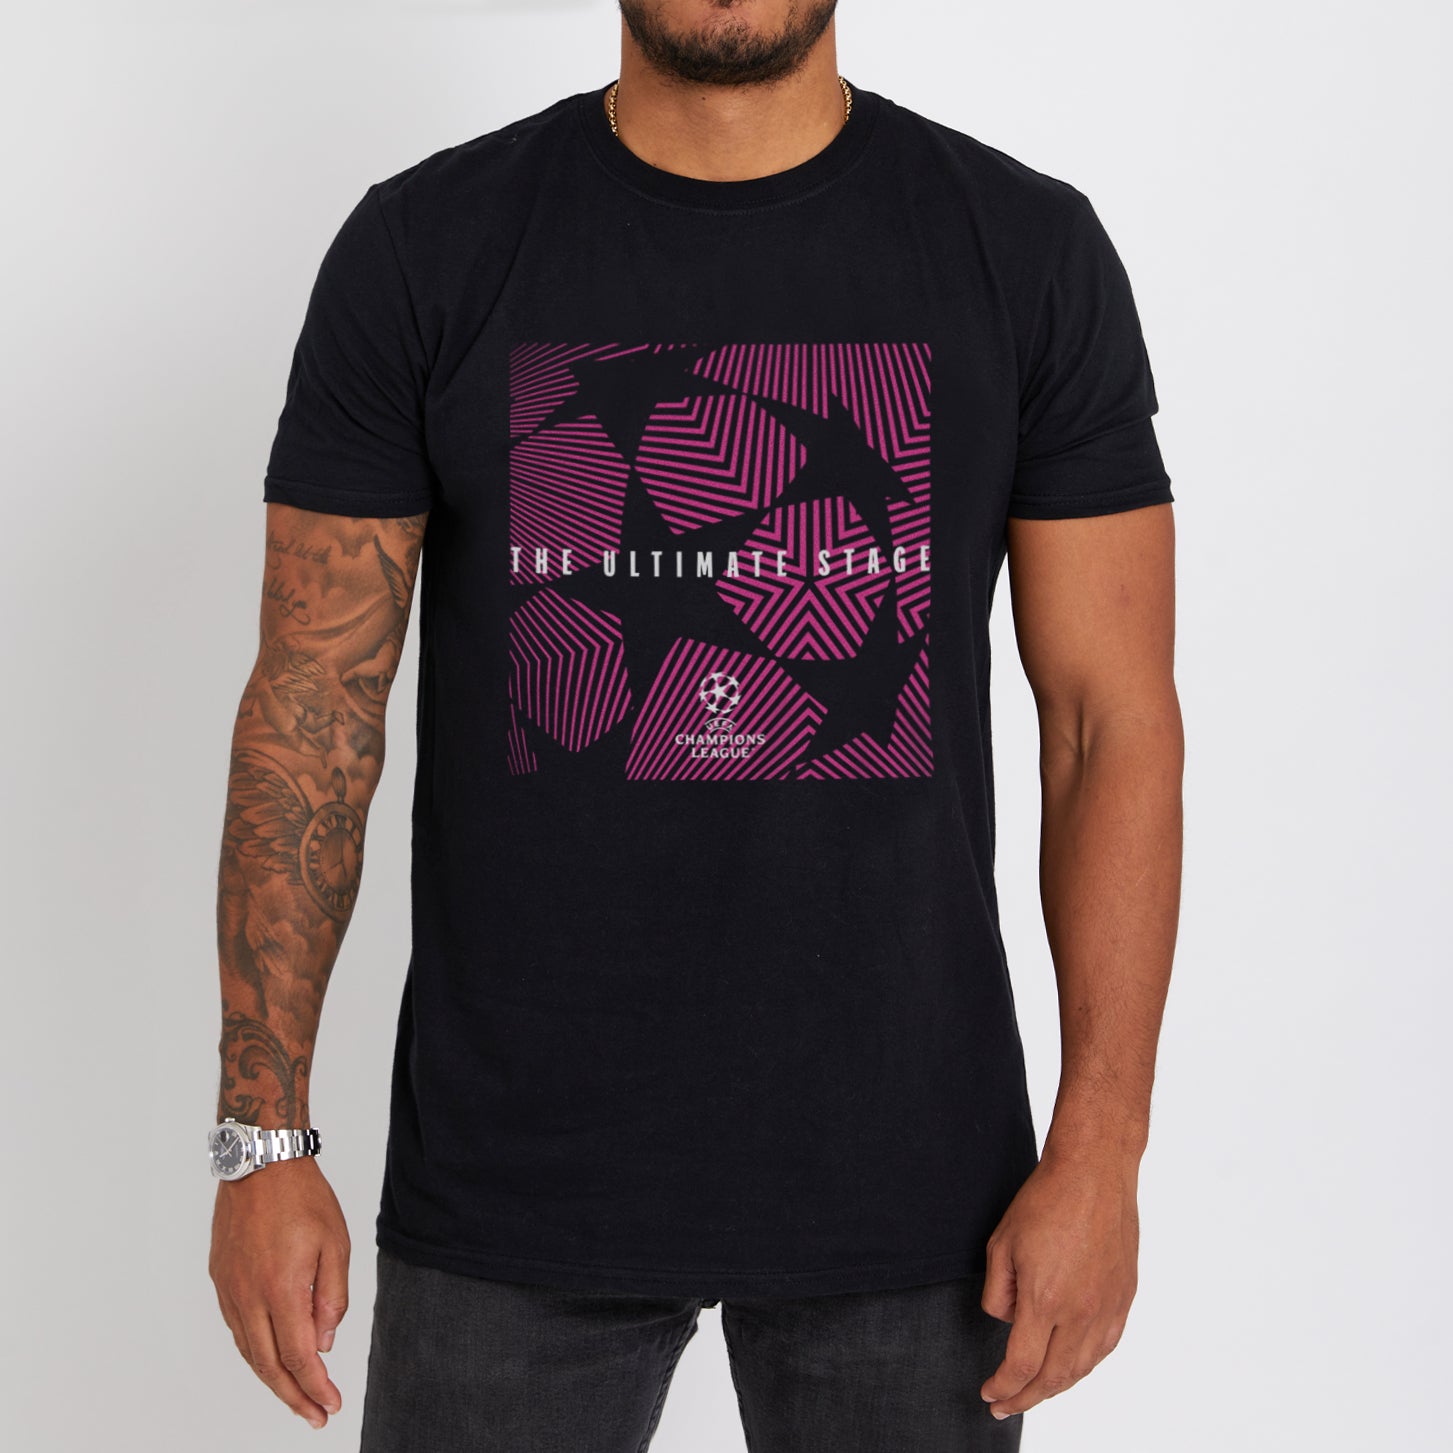 UEFA Champions League - Supergraphic Black T-Shirt UEFA Club Competitions Online Store